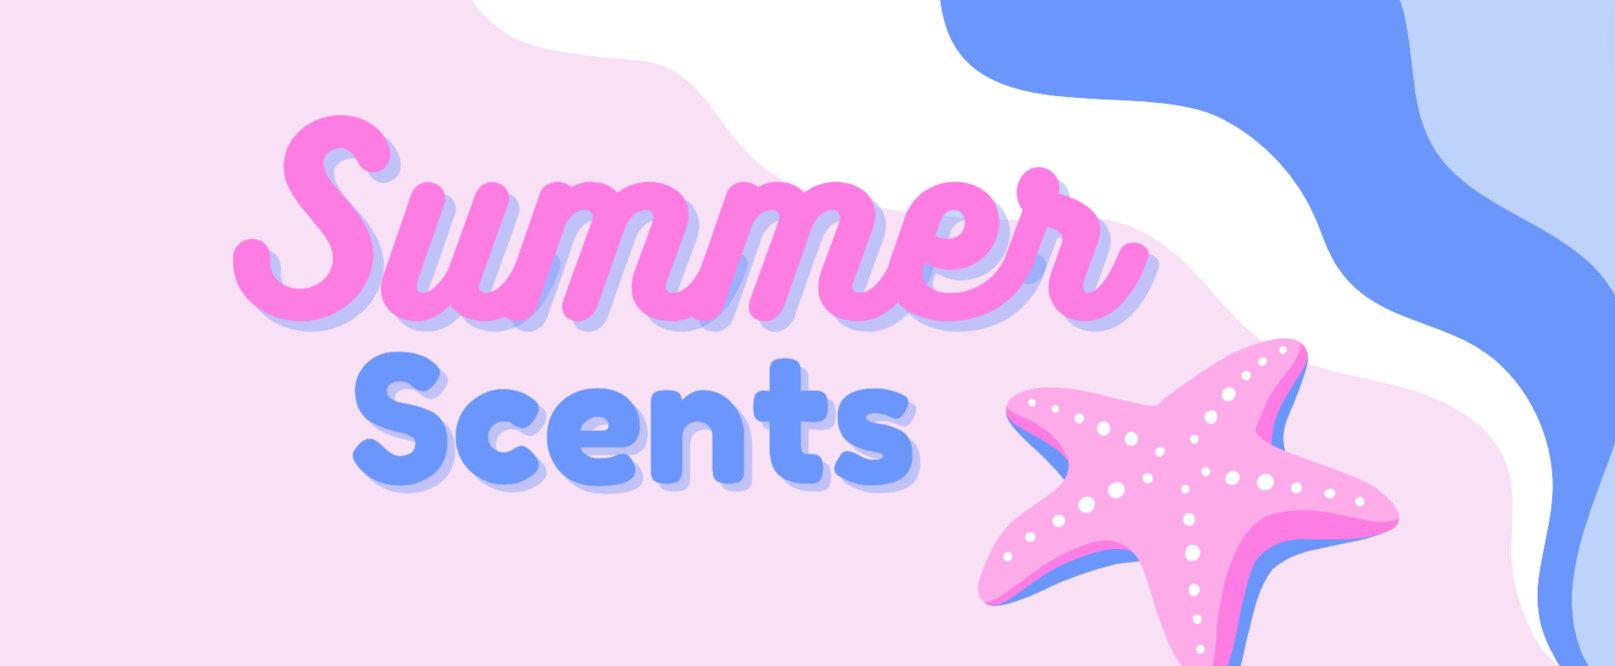 Favorite Summer Scents